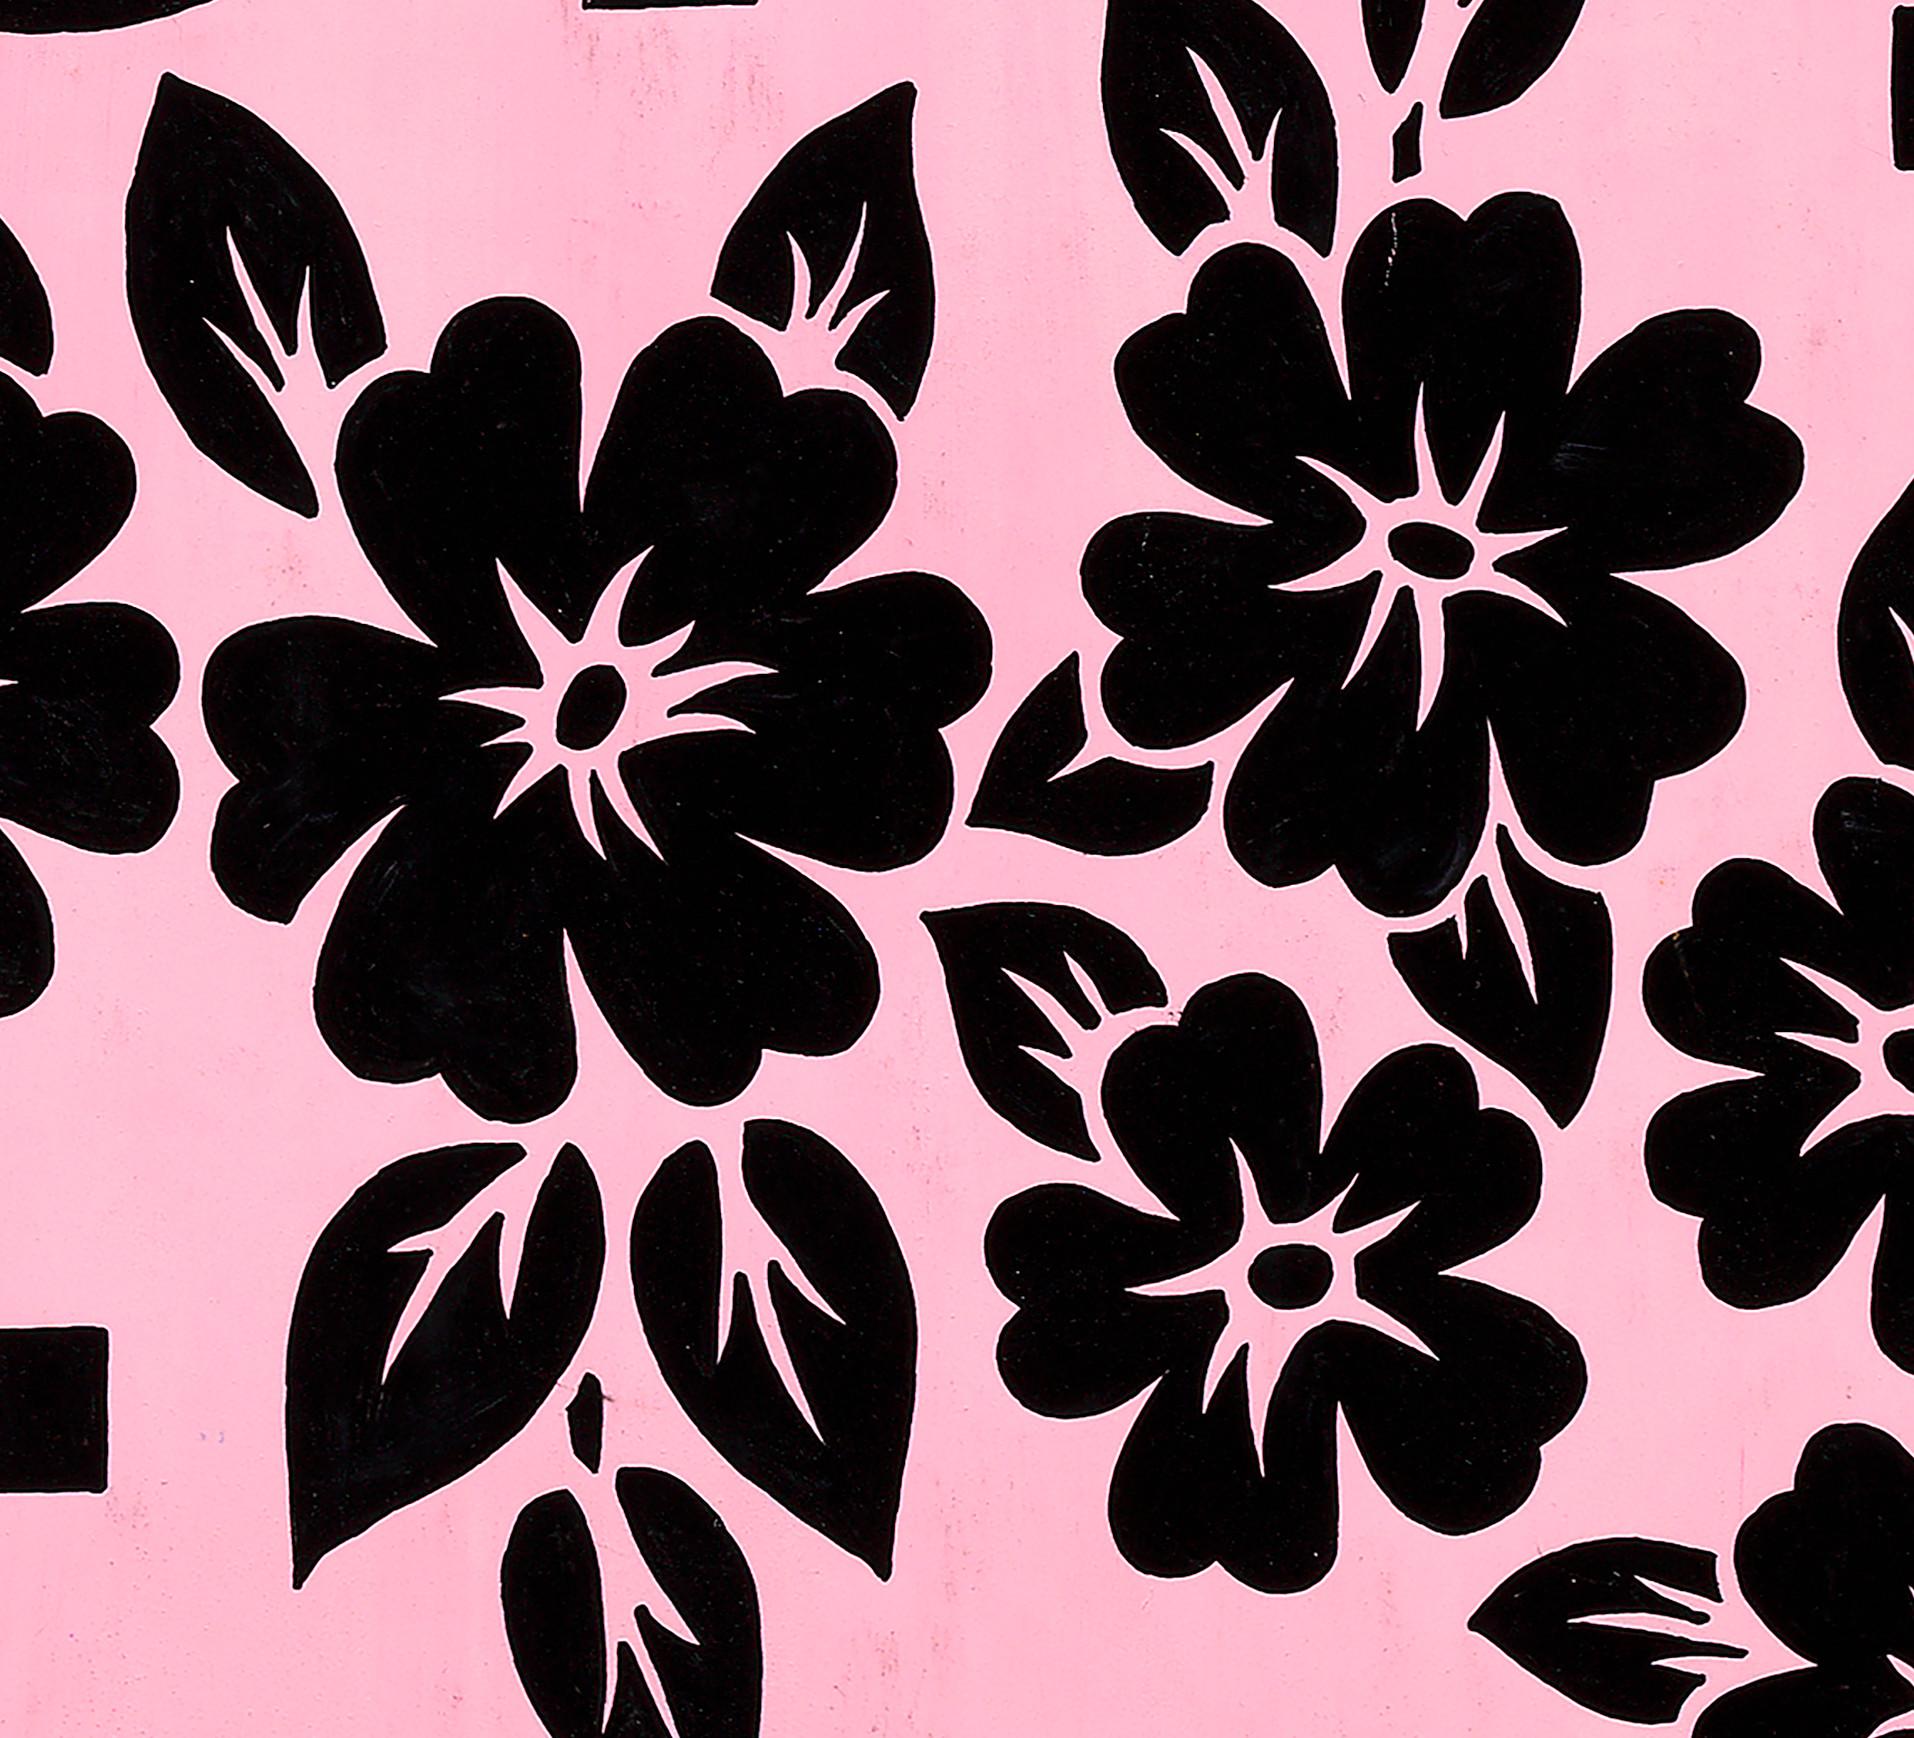 Original 70's Hand Painted Textile Design Gouache Pink & Black Color on Paper - Art by Unknown